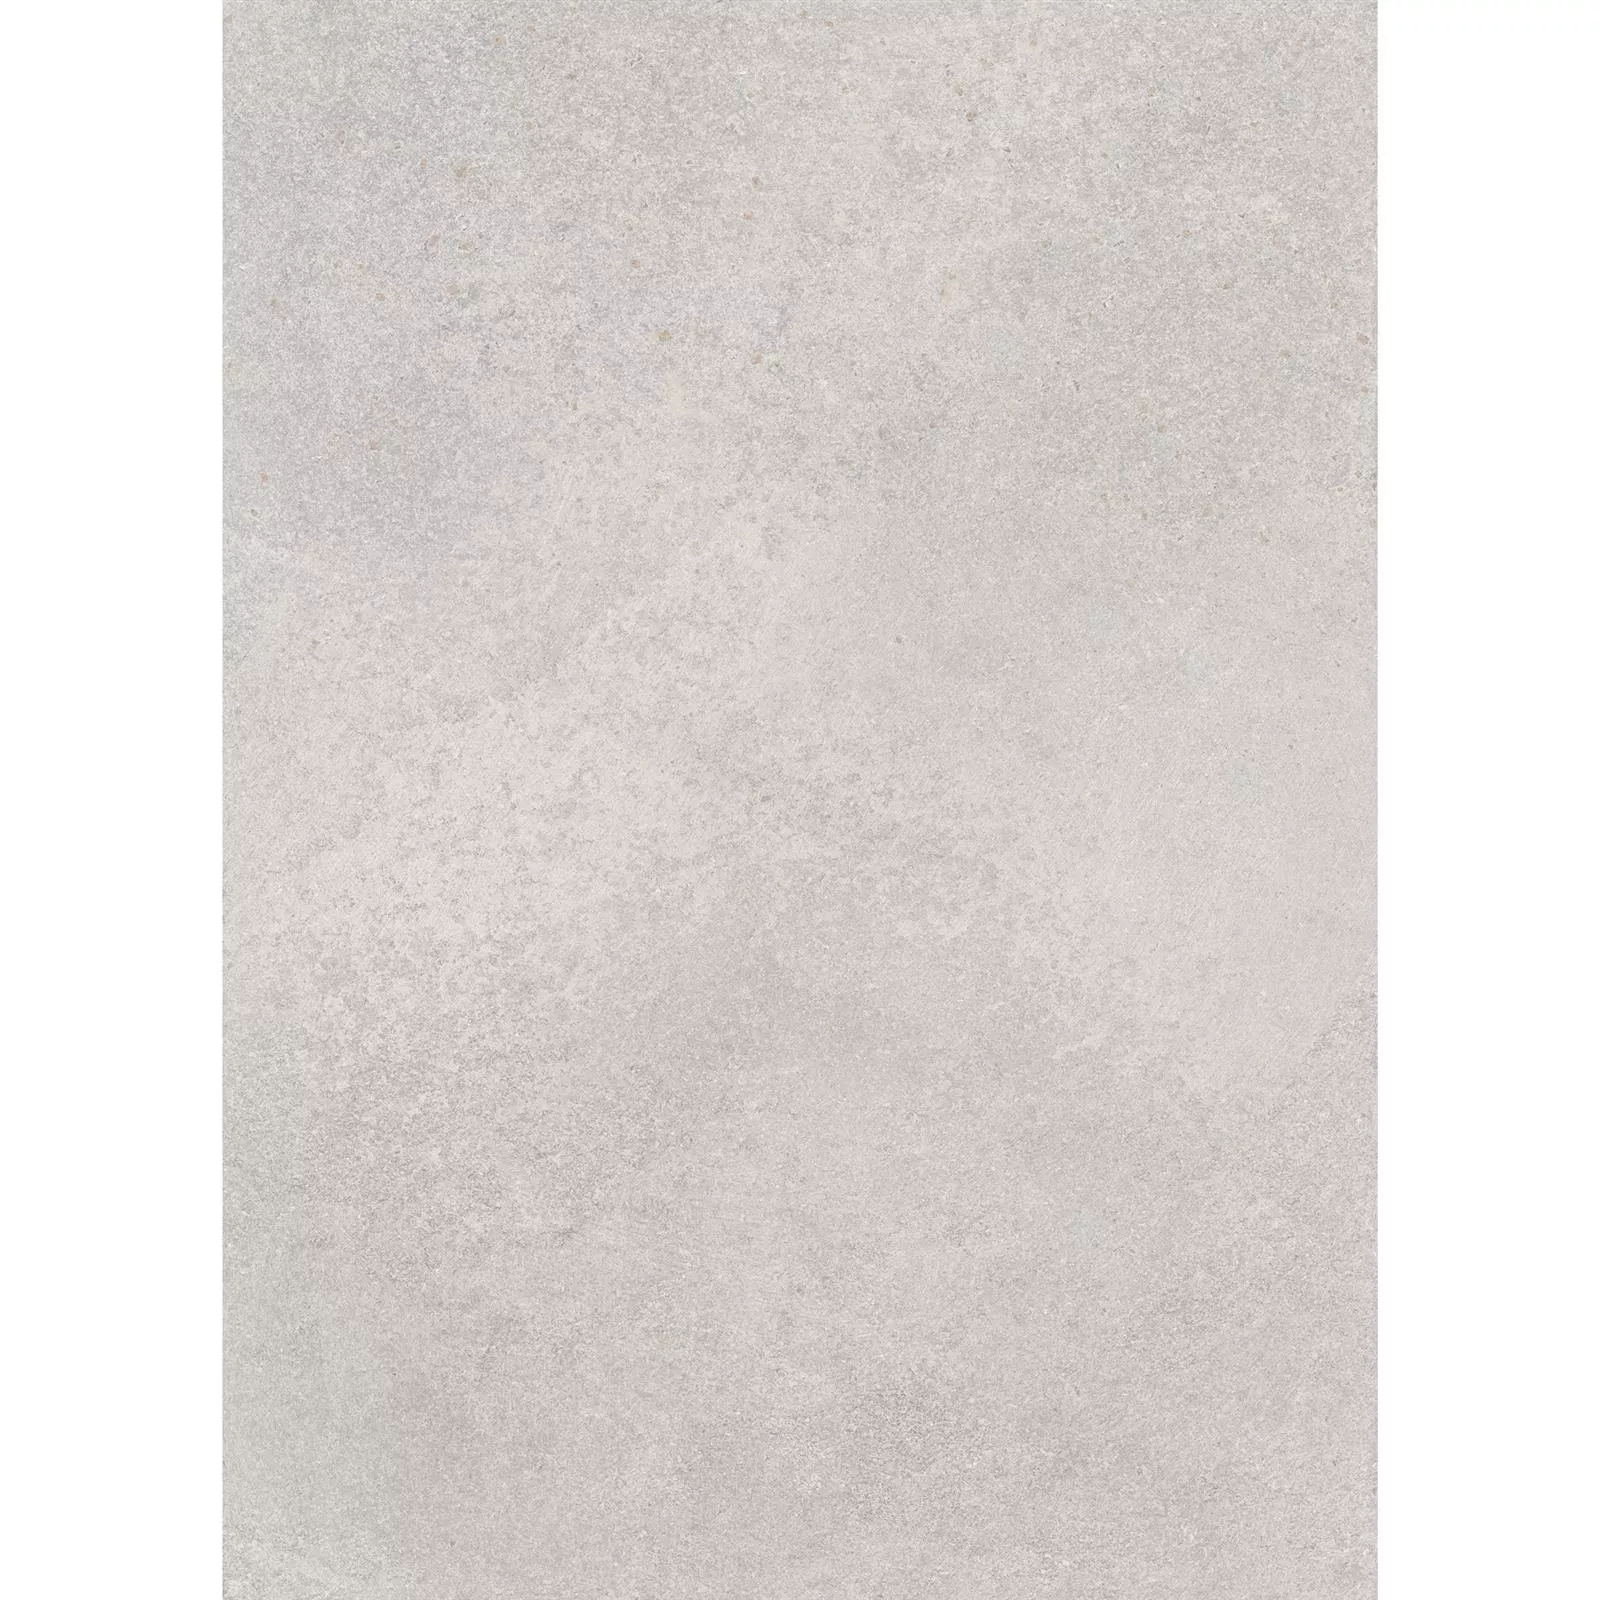 Muster Bodenfliesen Steinoptik Horizon Grau 60x120cm